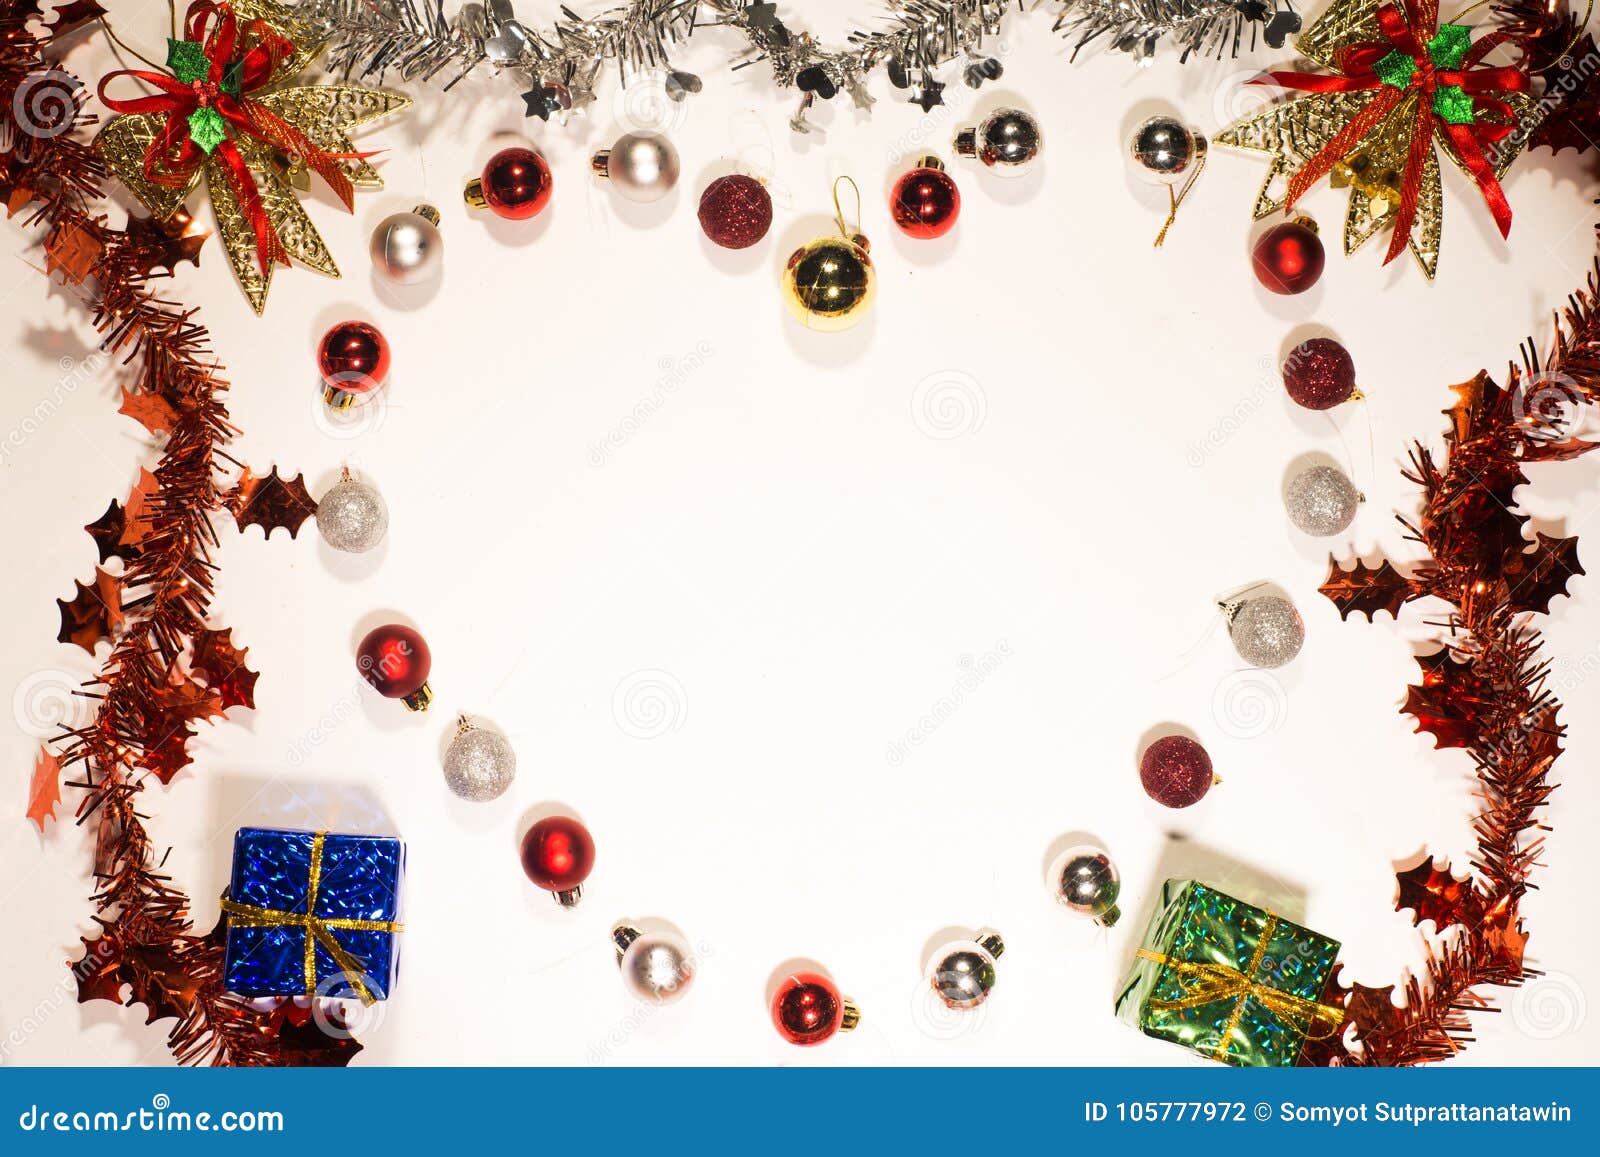 Heart Shape Ornaments Christmas Decoration Border Stock Photo - Image ...